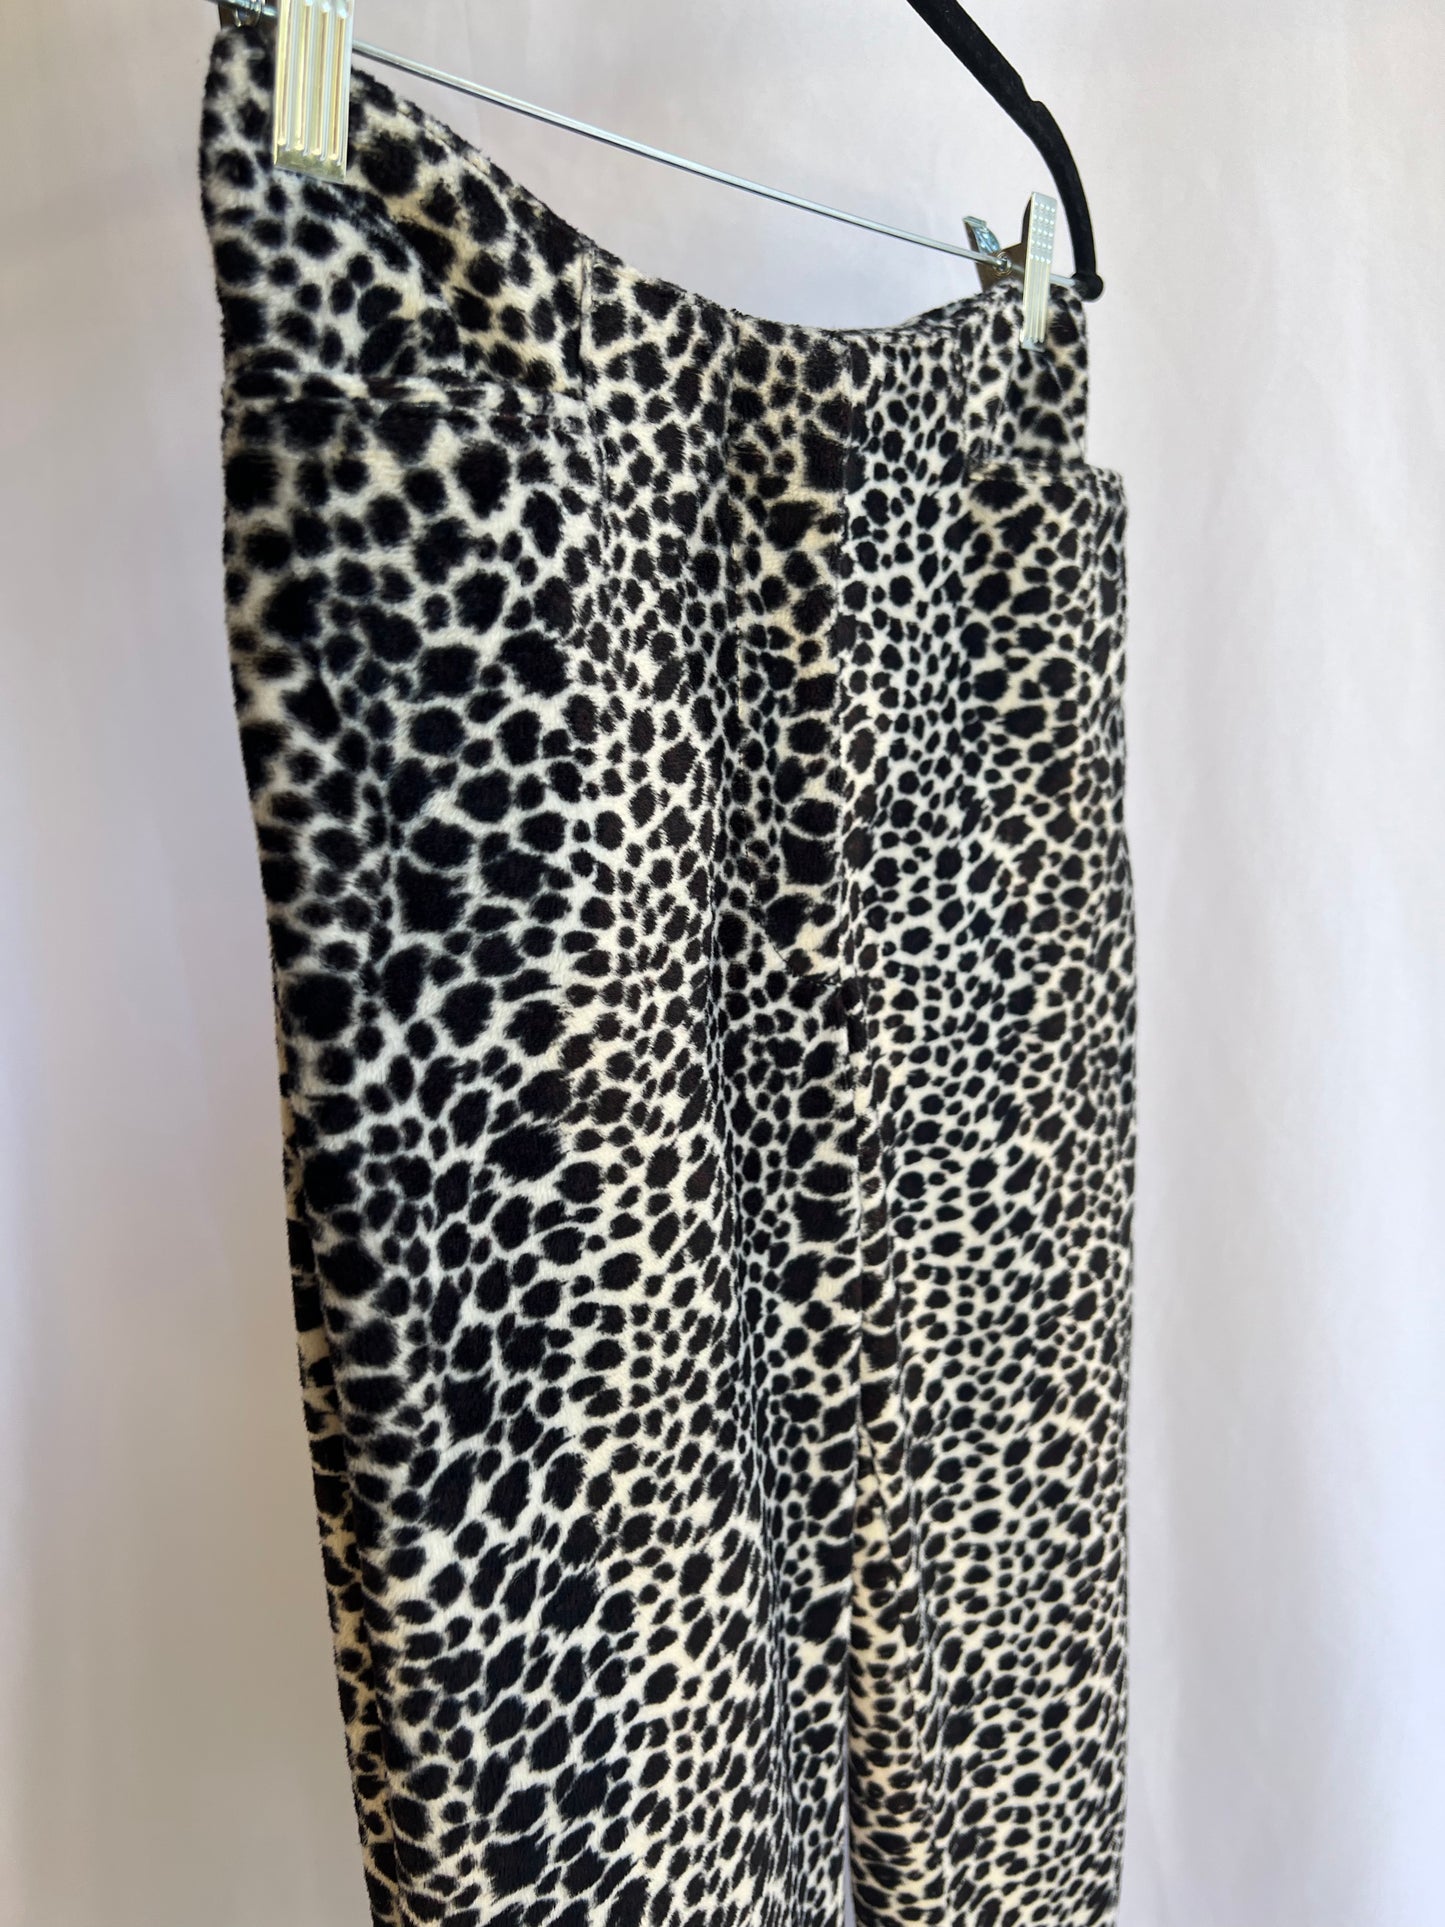 Cheetah Print Furry Pants - 27"